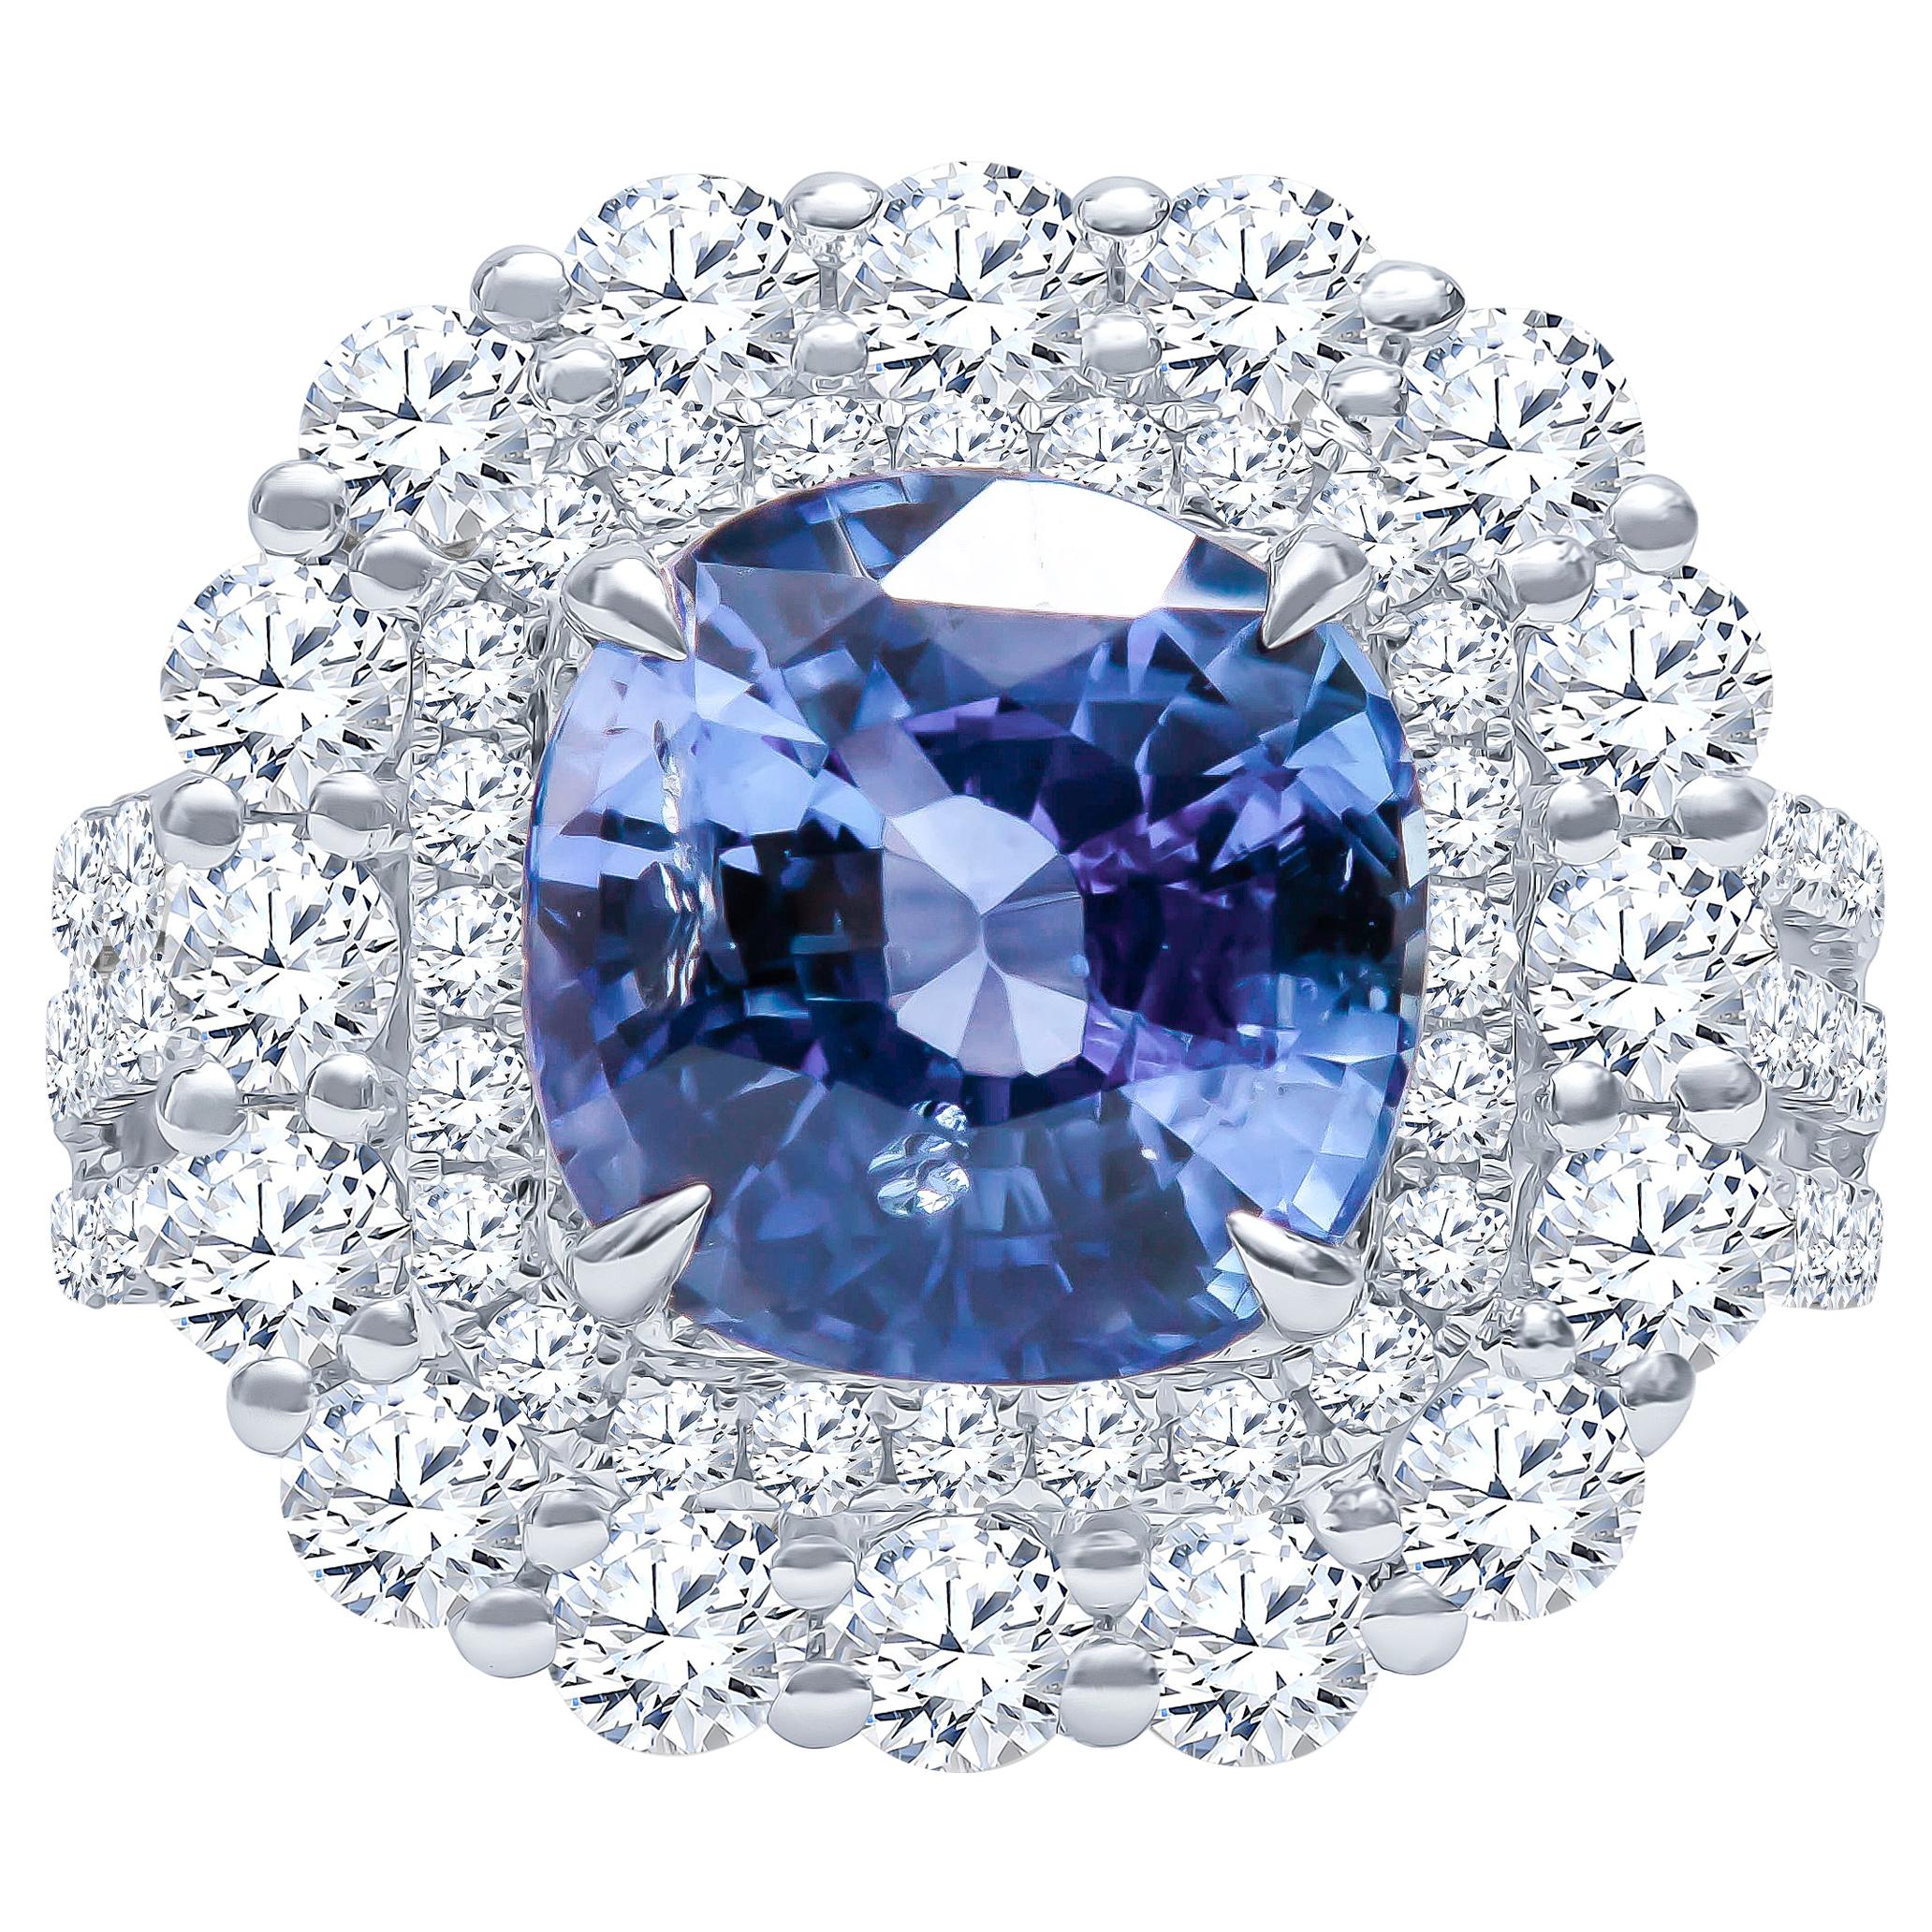 4.57 Carat Natural Ceylon Sapphire, Cushion Cut 'AGL Report' in a Diamond Ring